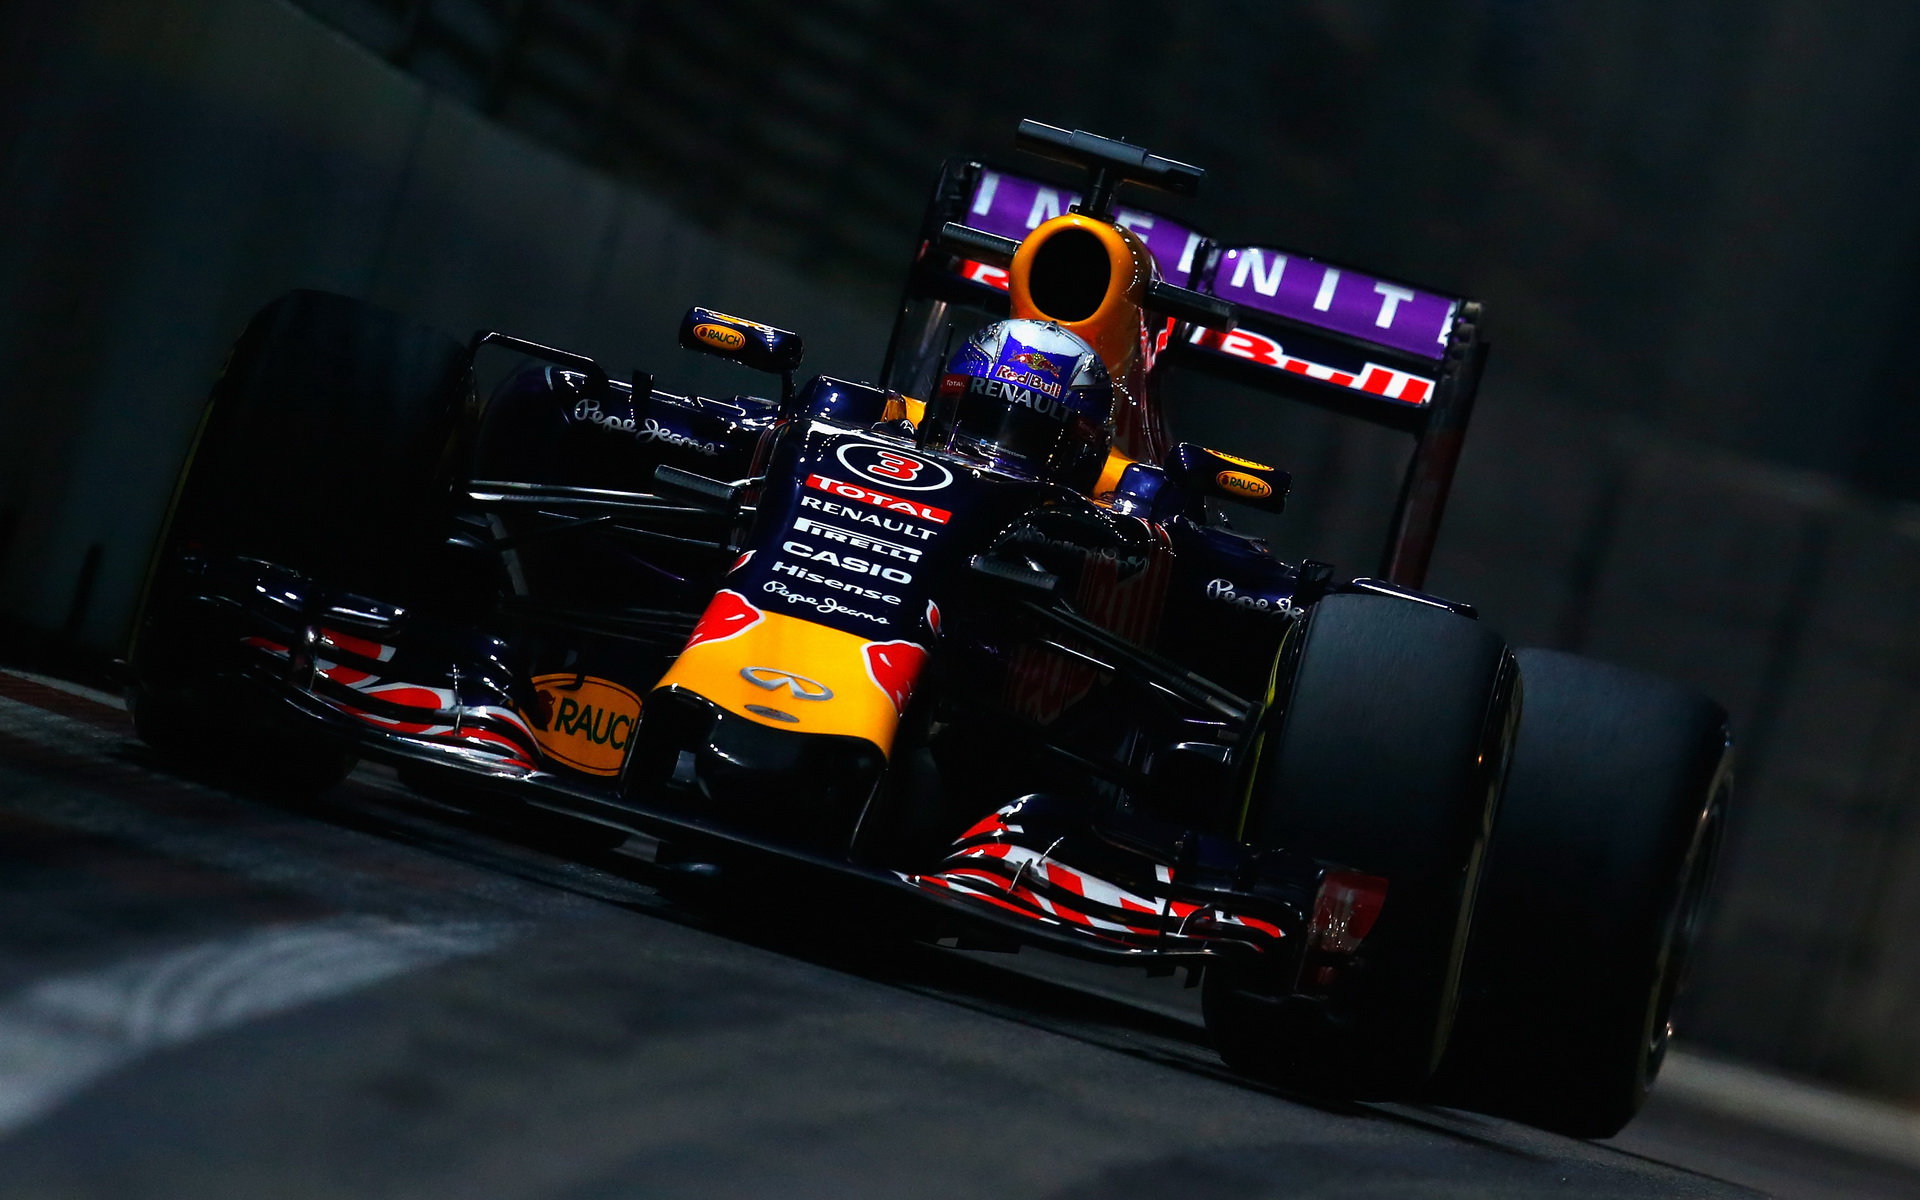 Daniel Ricciardo, GP Singapuru (Singapur)